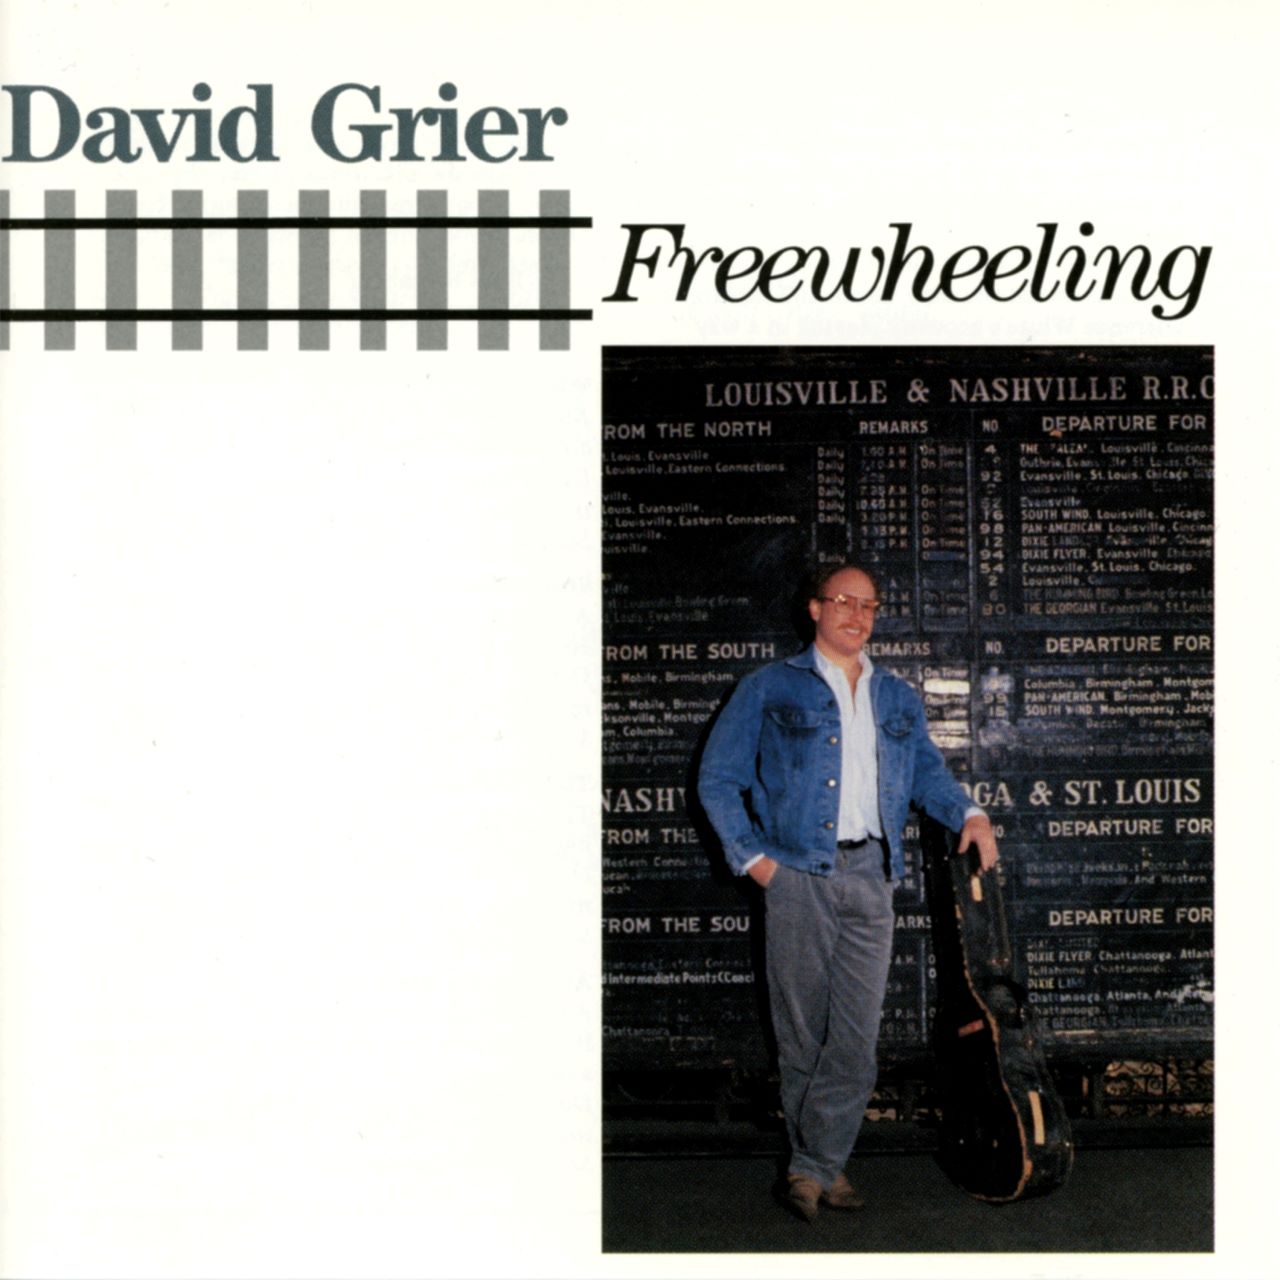 David Grier - Freewheeling cover album